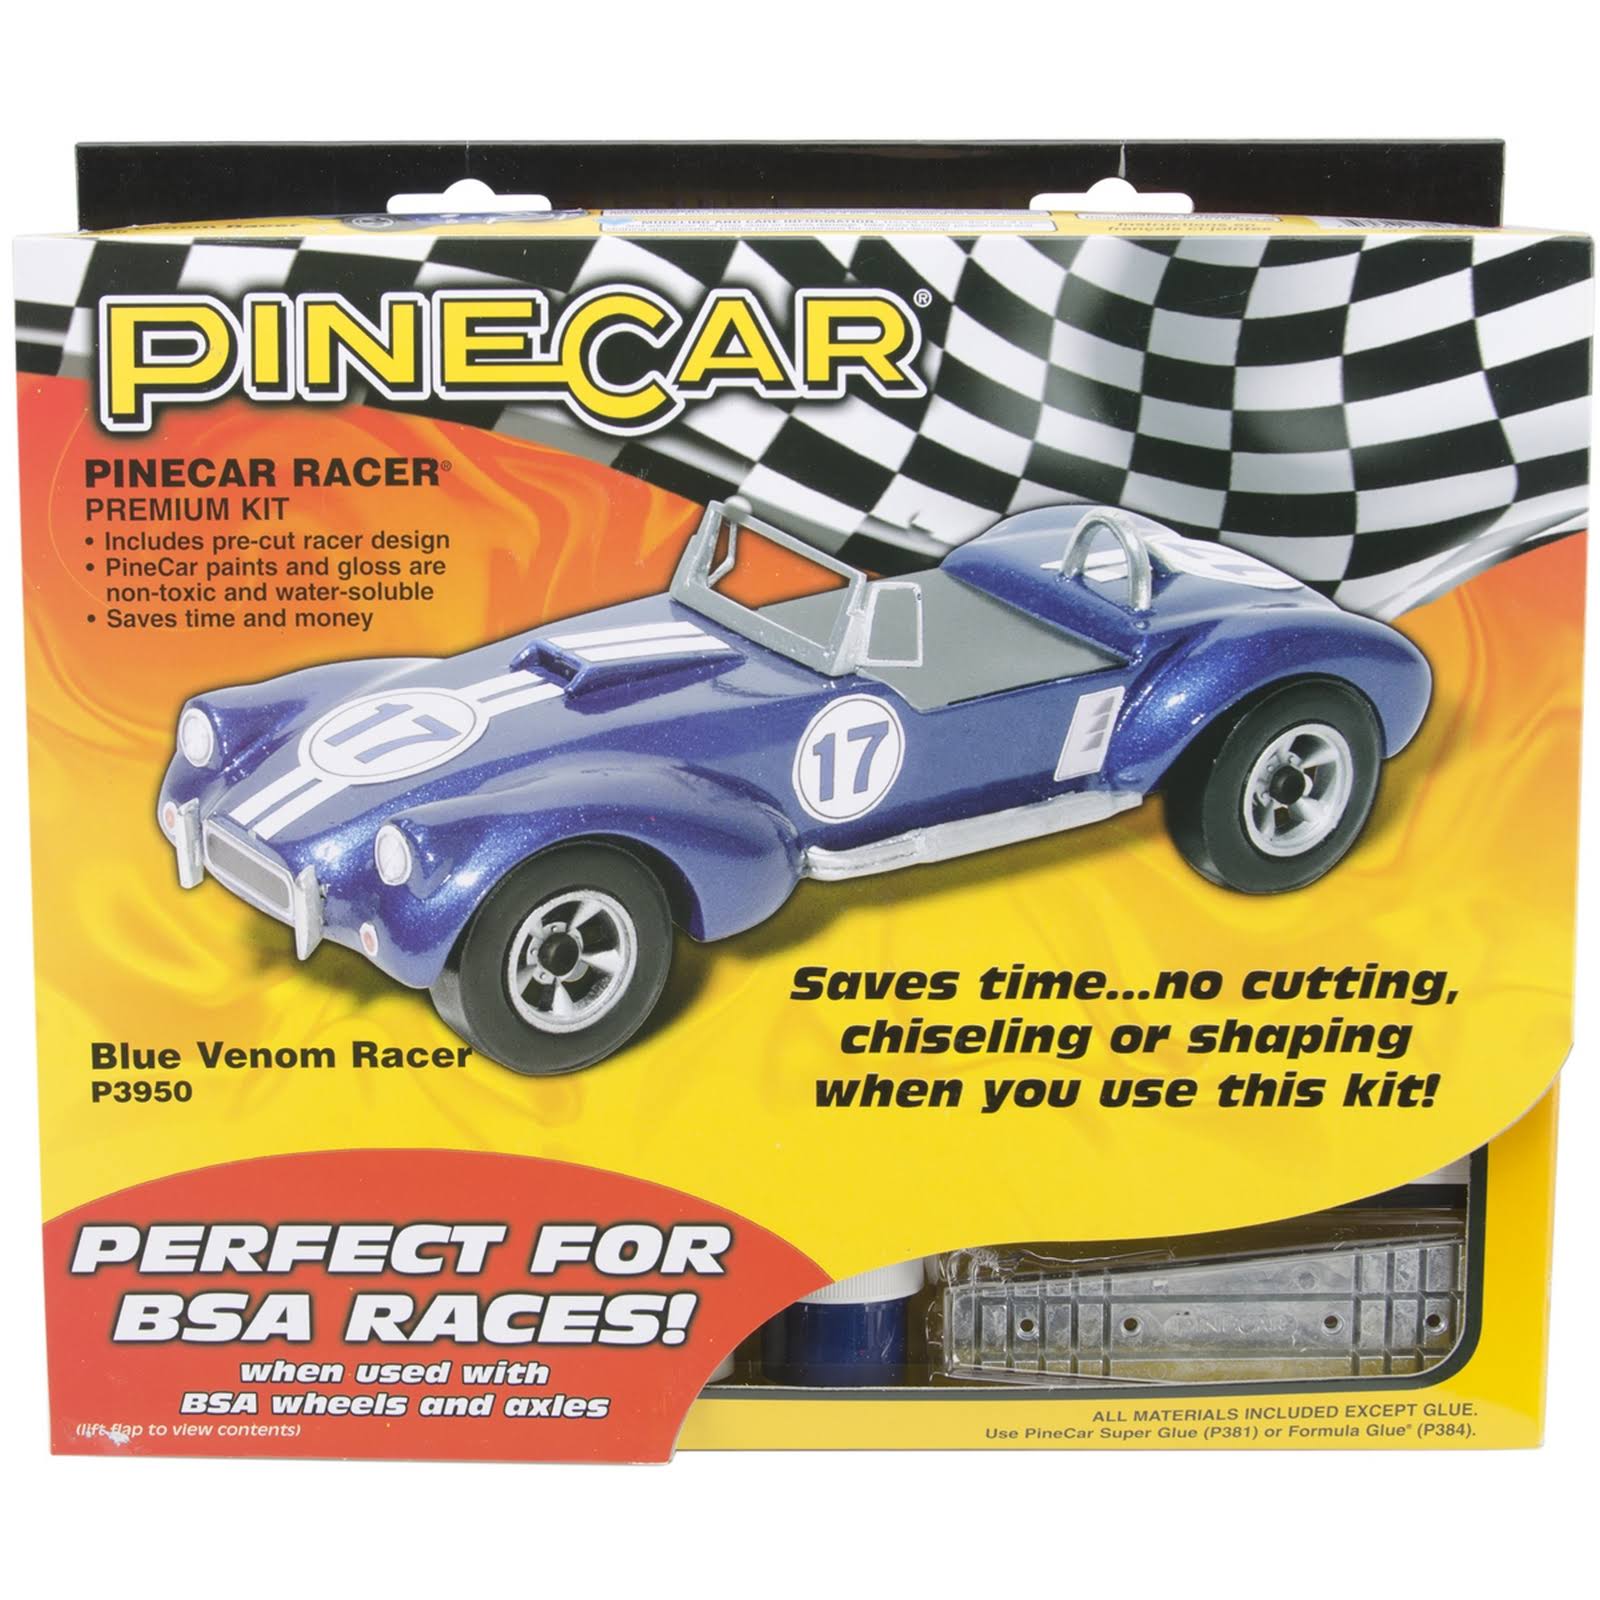 Pine Car Premium Racer Kit - Blue Venom